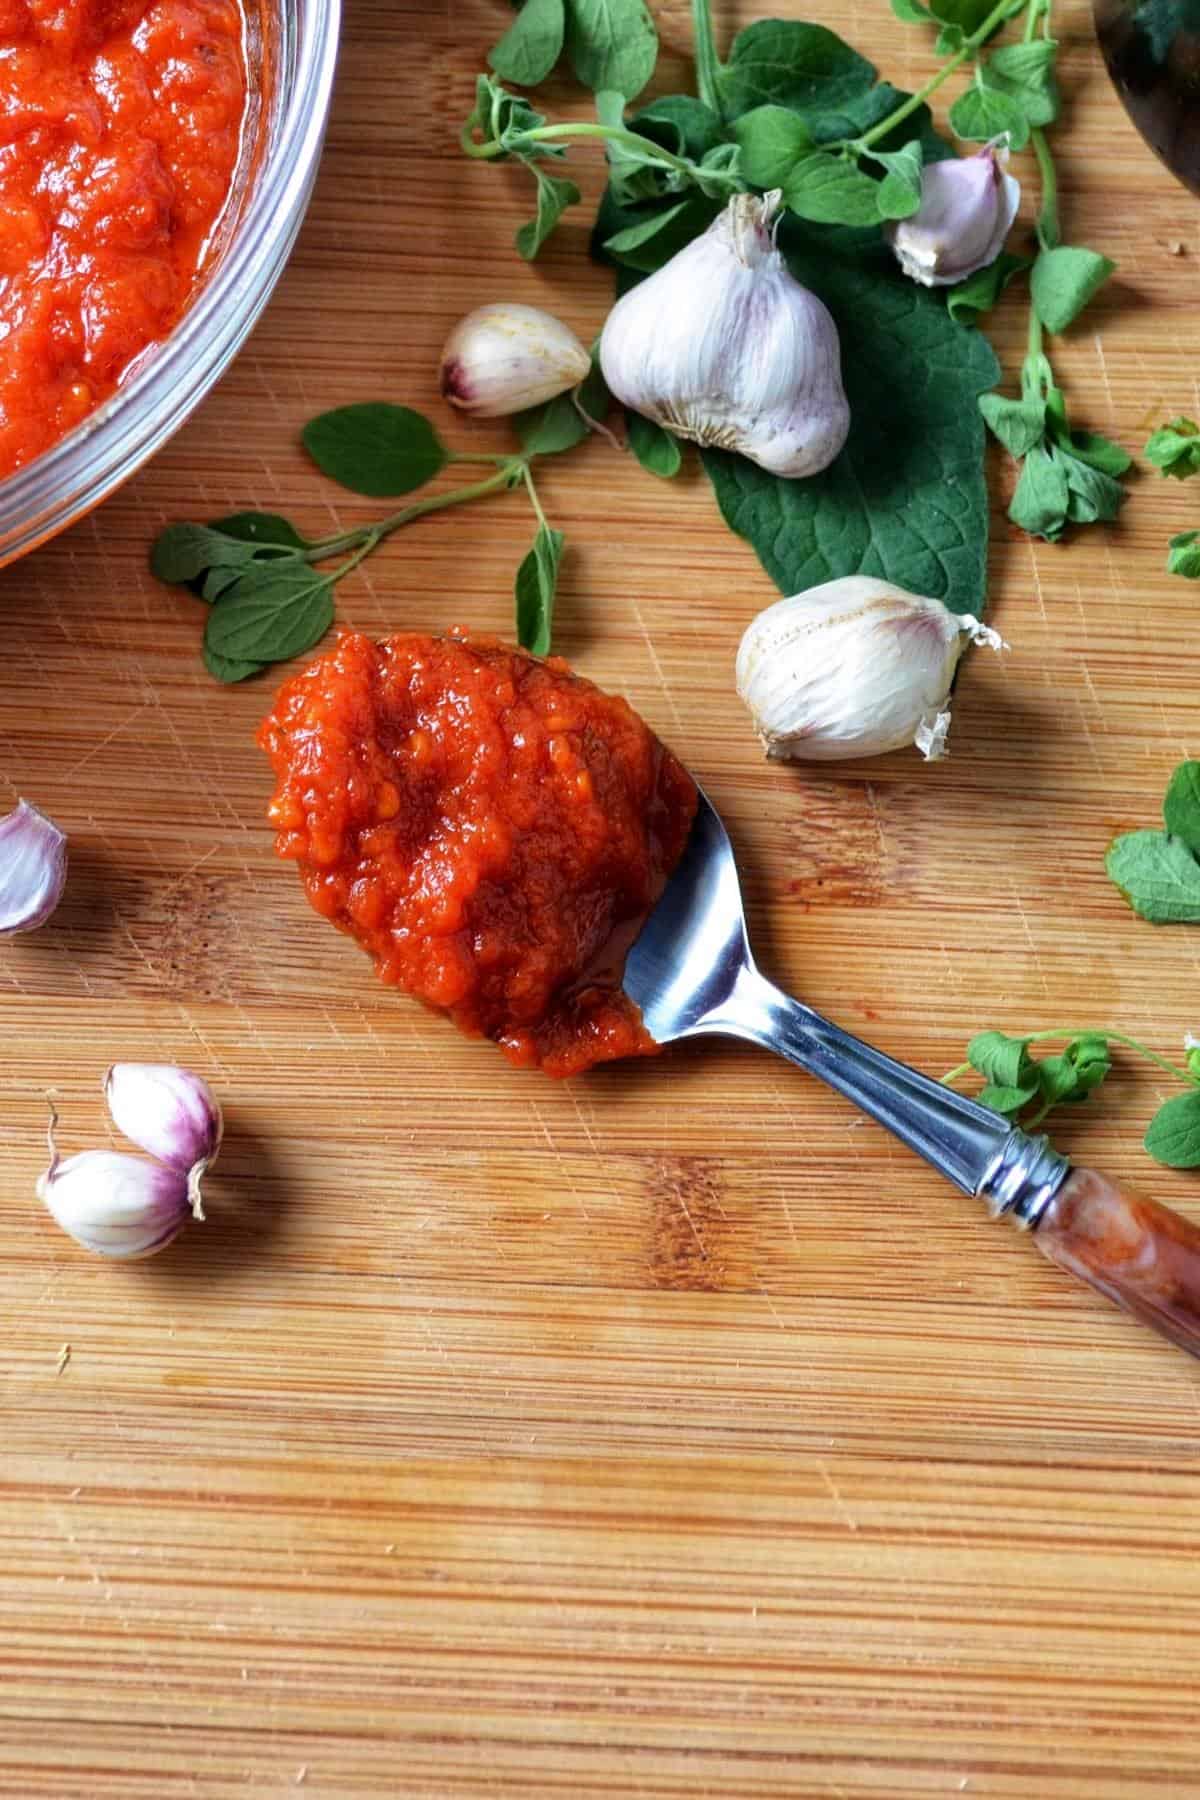 A spoonful of marinara sauce next to garlic cloves.